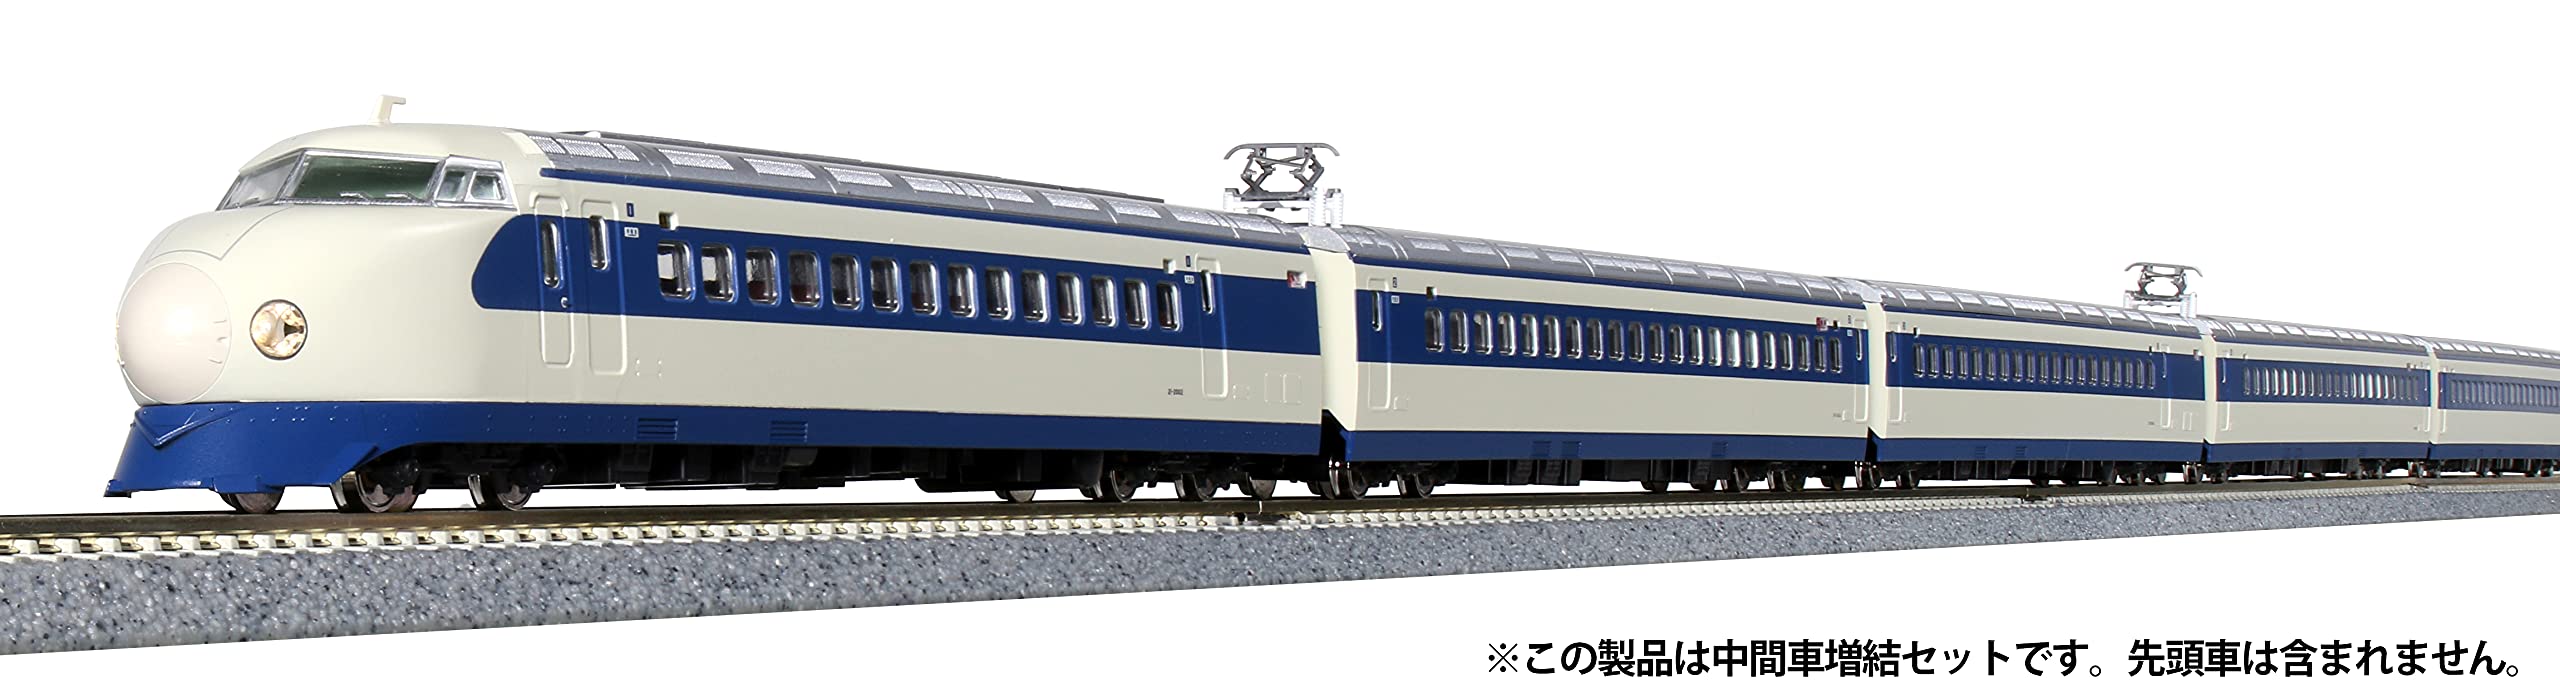 Kato N Gauge Hikari/Kodama 8-Car Set 0 Series 2000 Shinkansen Model Train